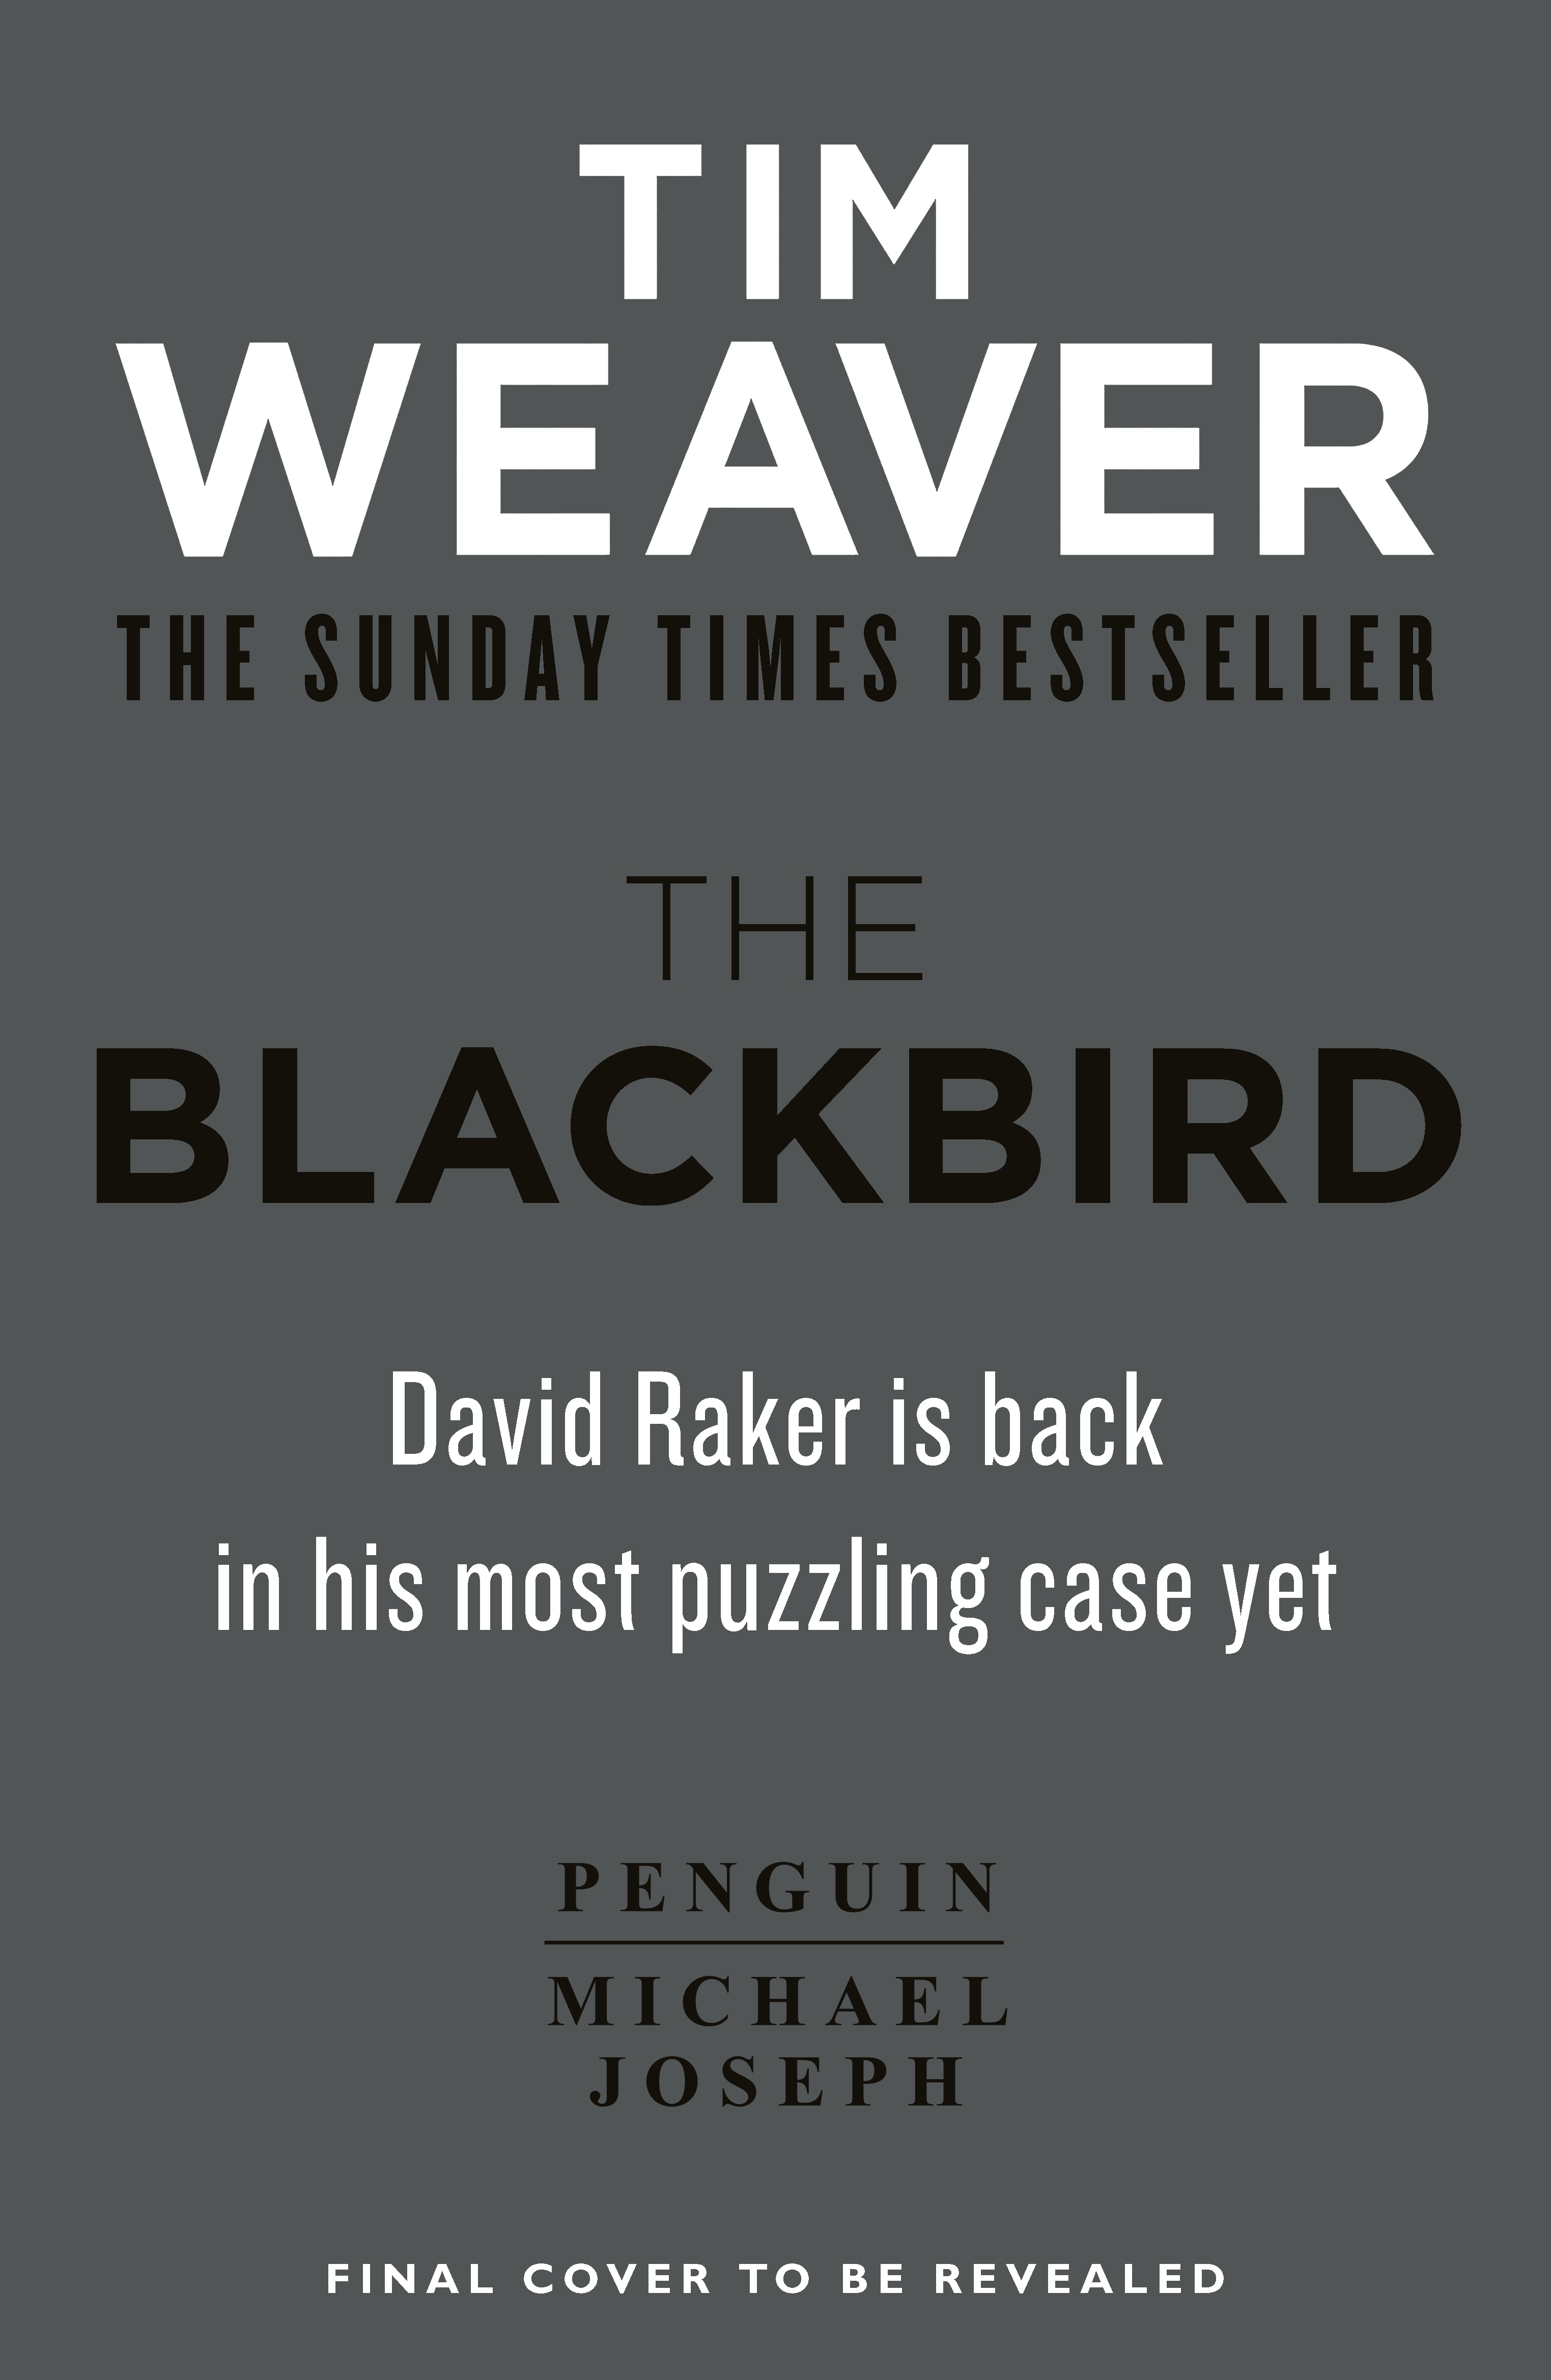 Book “The Blackbird” by Tim Weaver — February 2, 2023